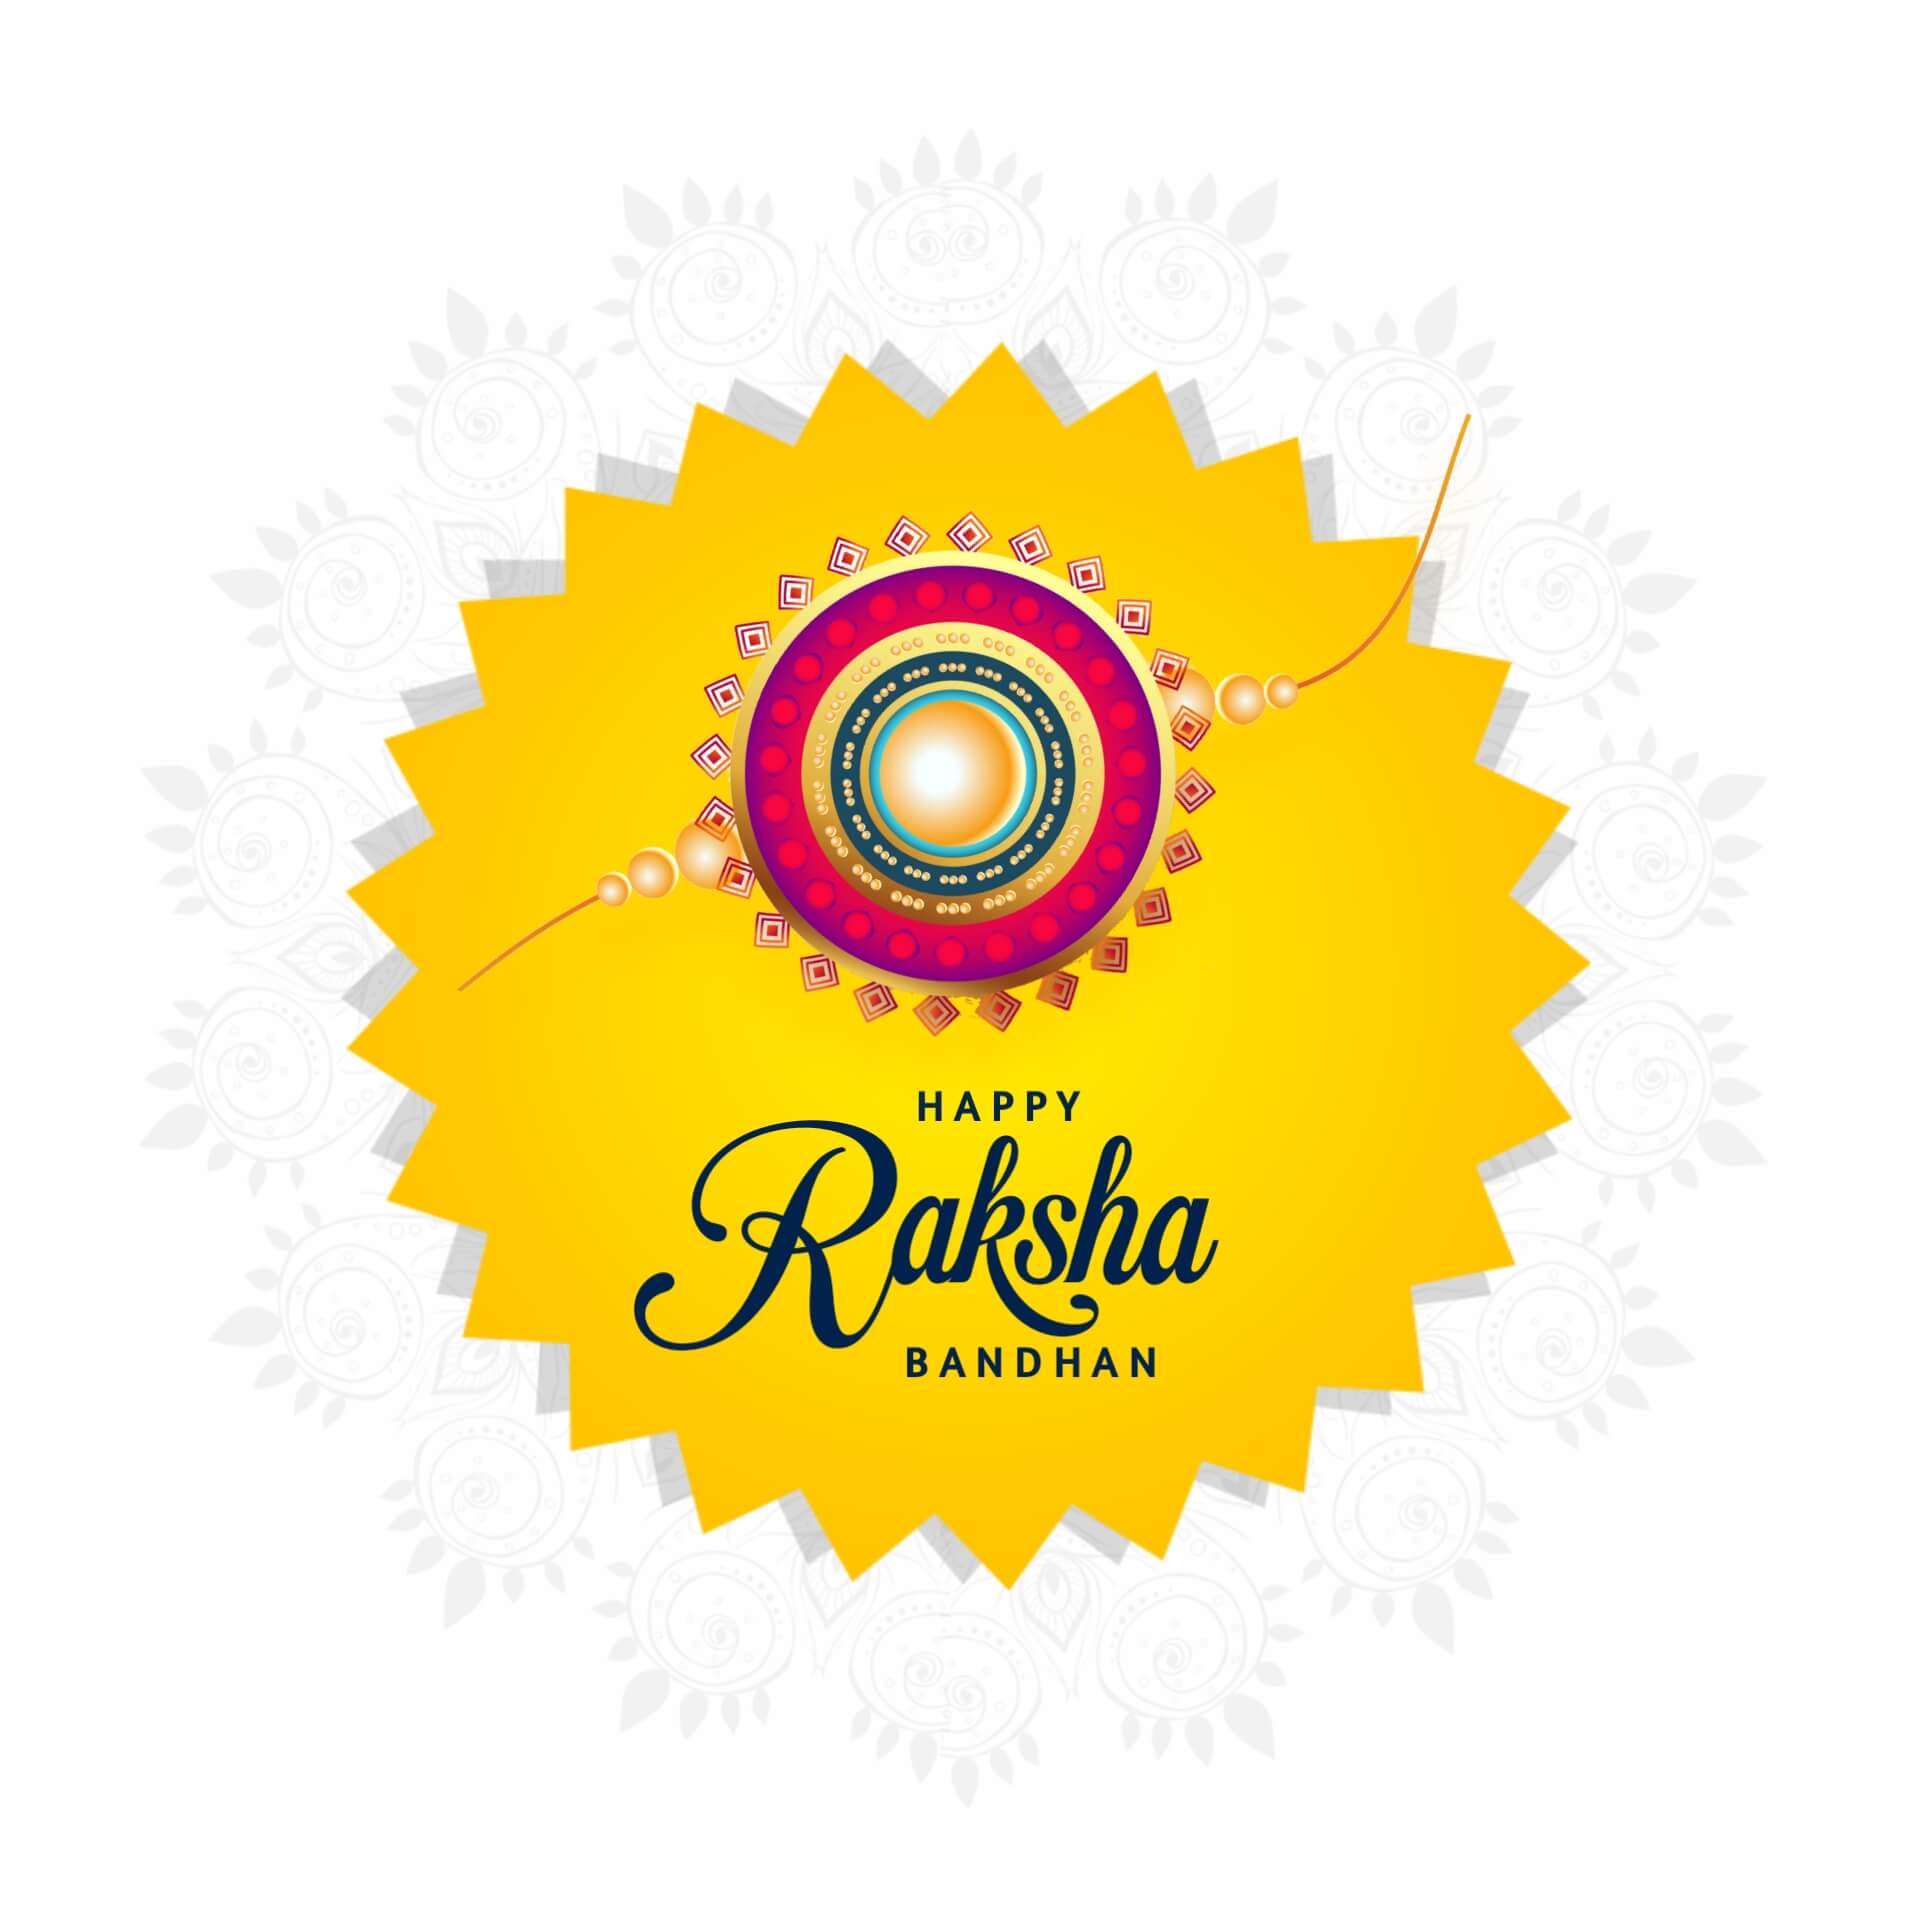 Happy Raksha Bandhan Image hd Download